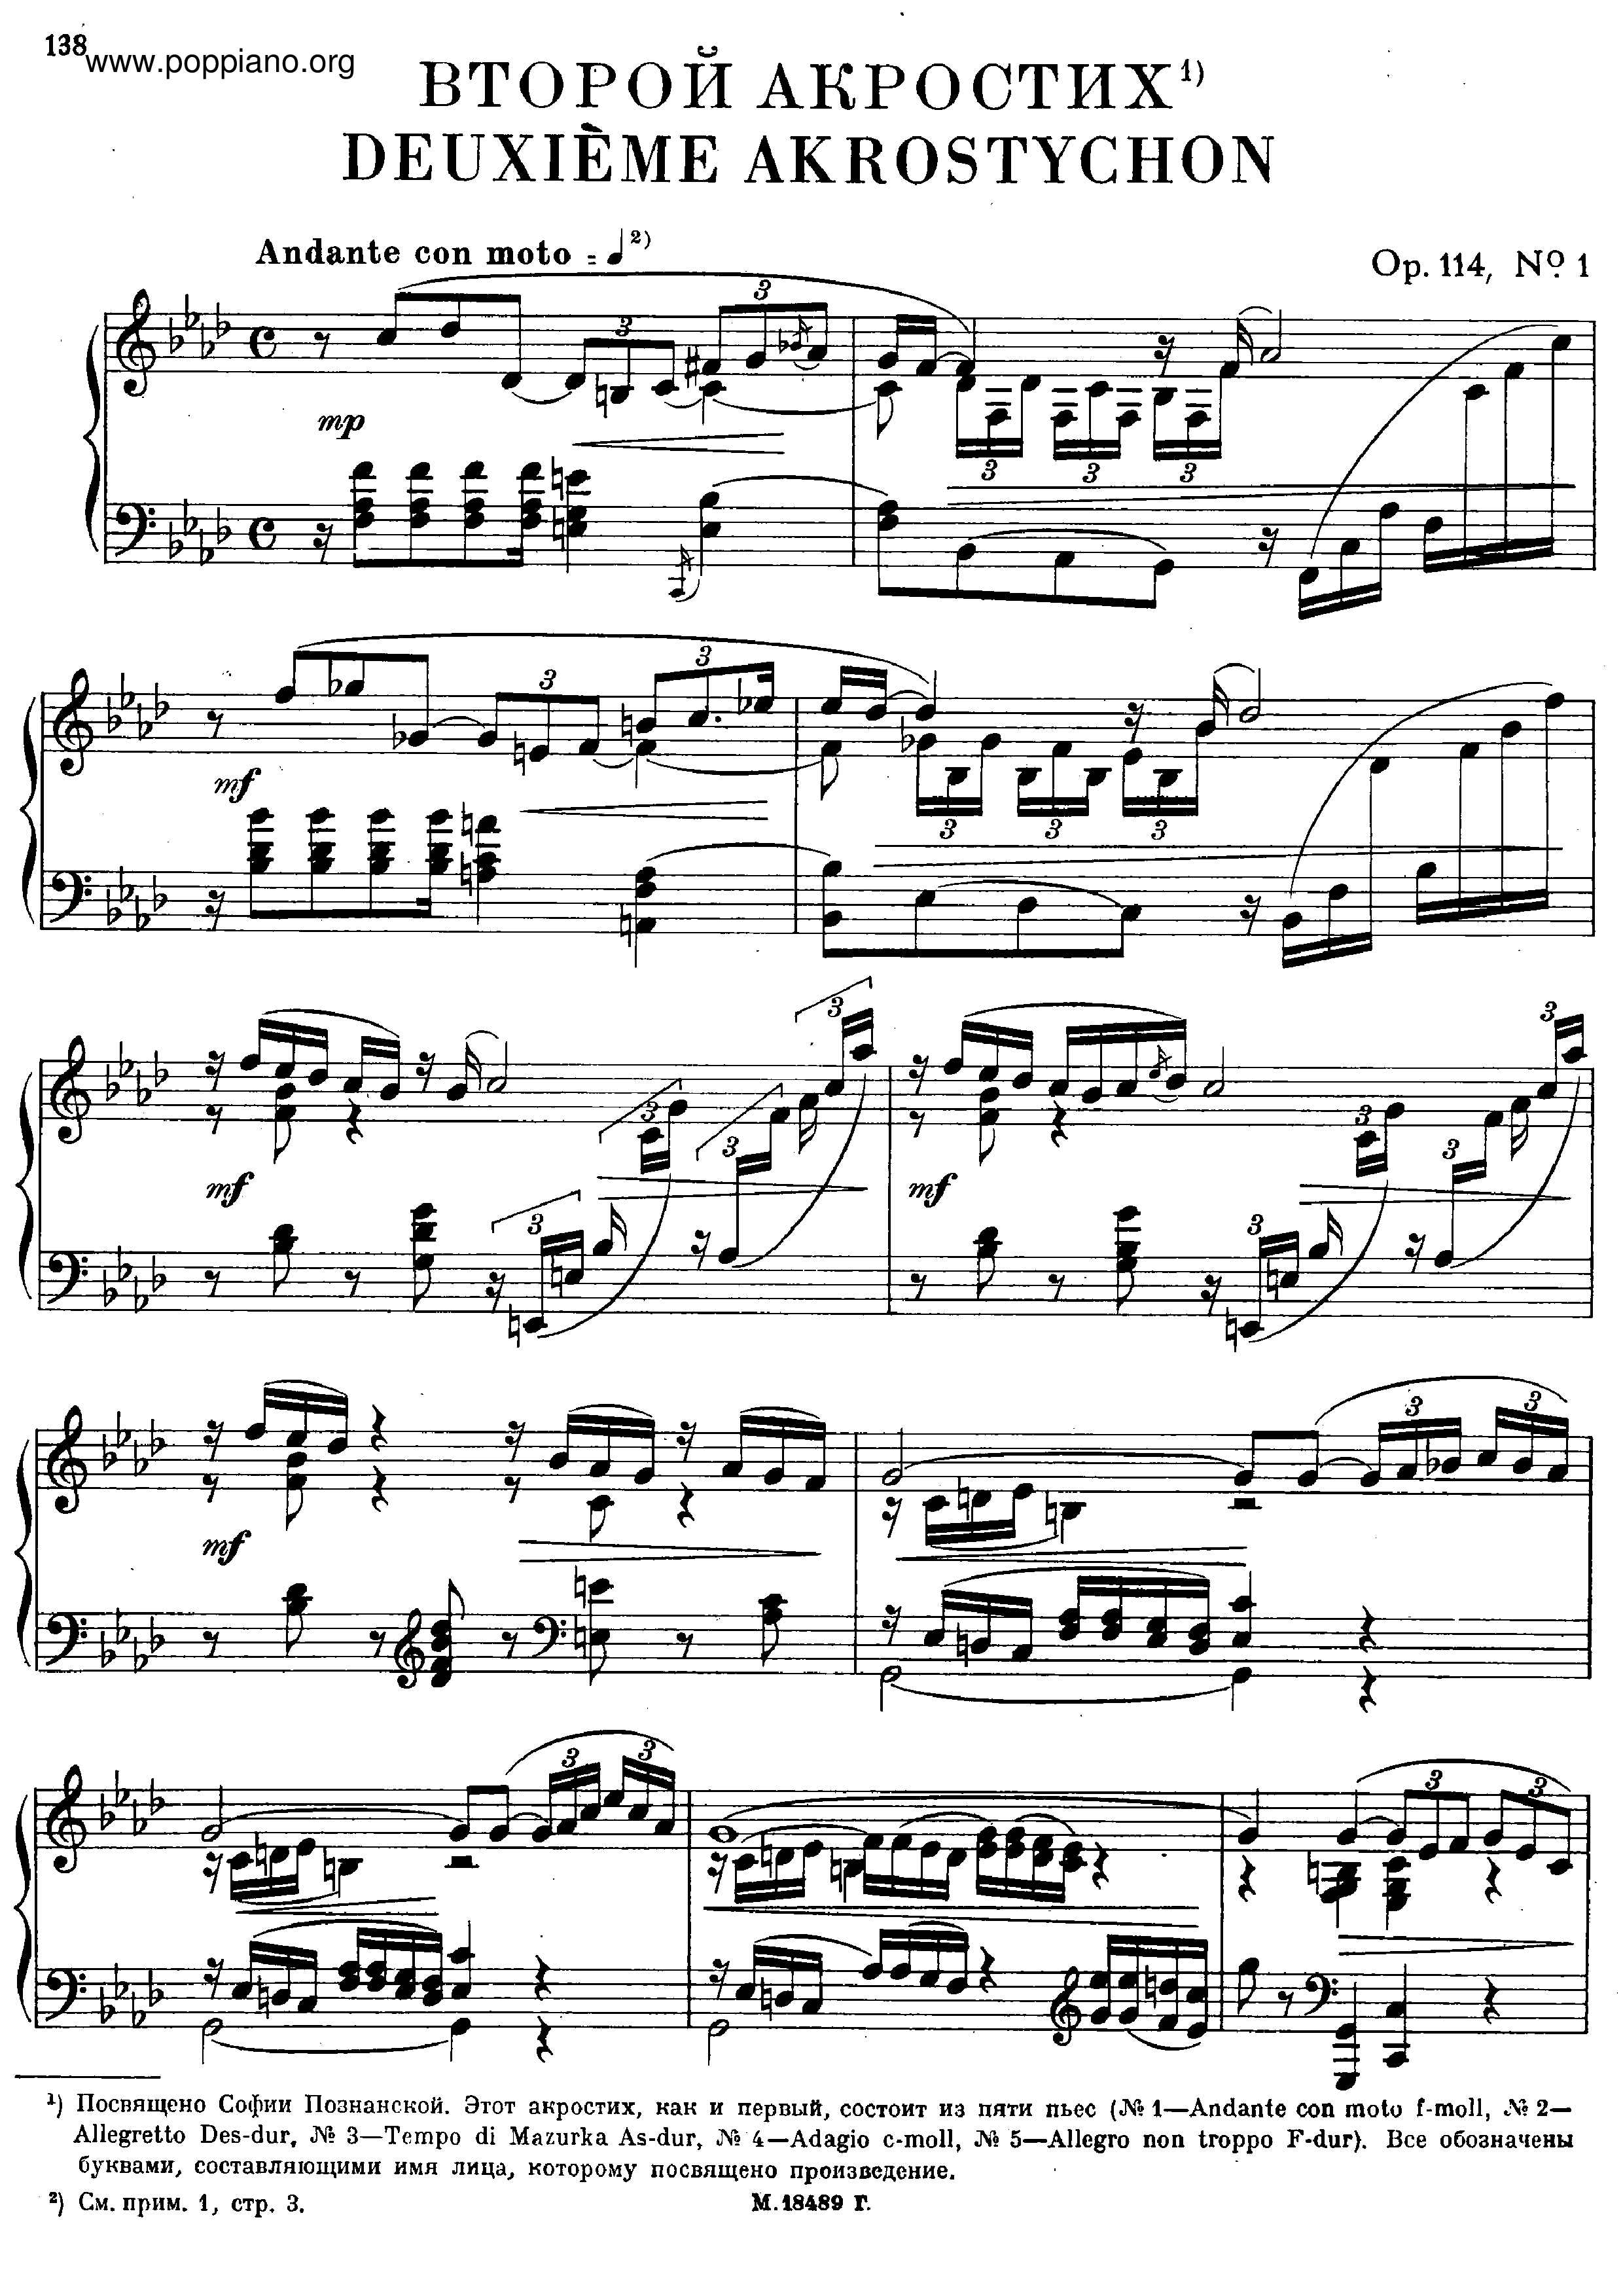 Acrostychon No.2, Op.114琴譜